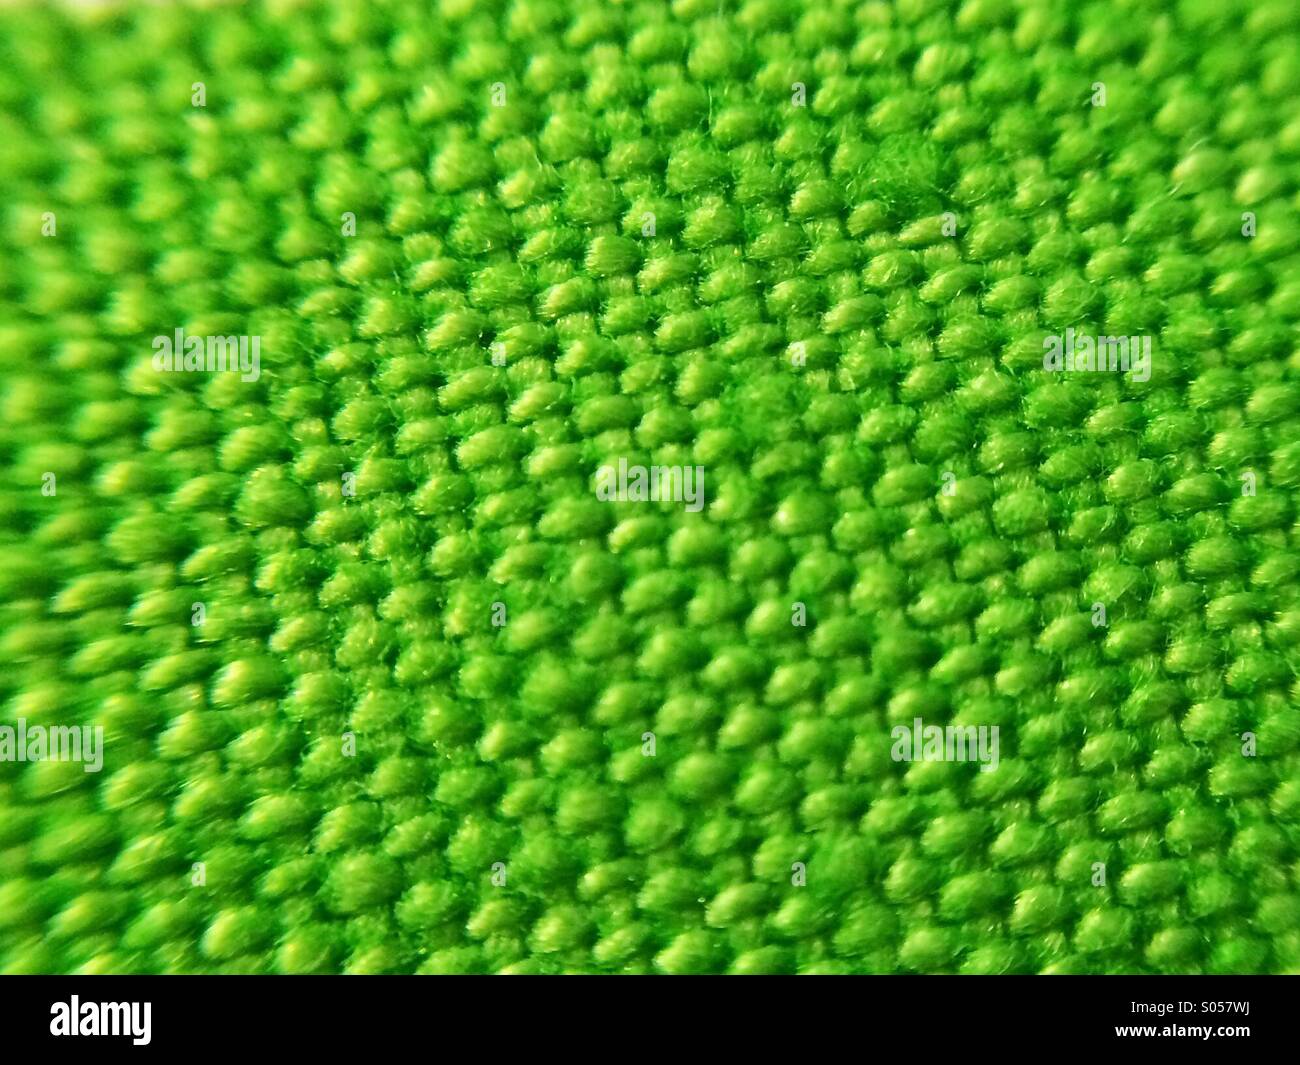 Macro of green fabric Stock Photo